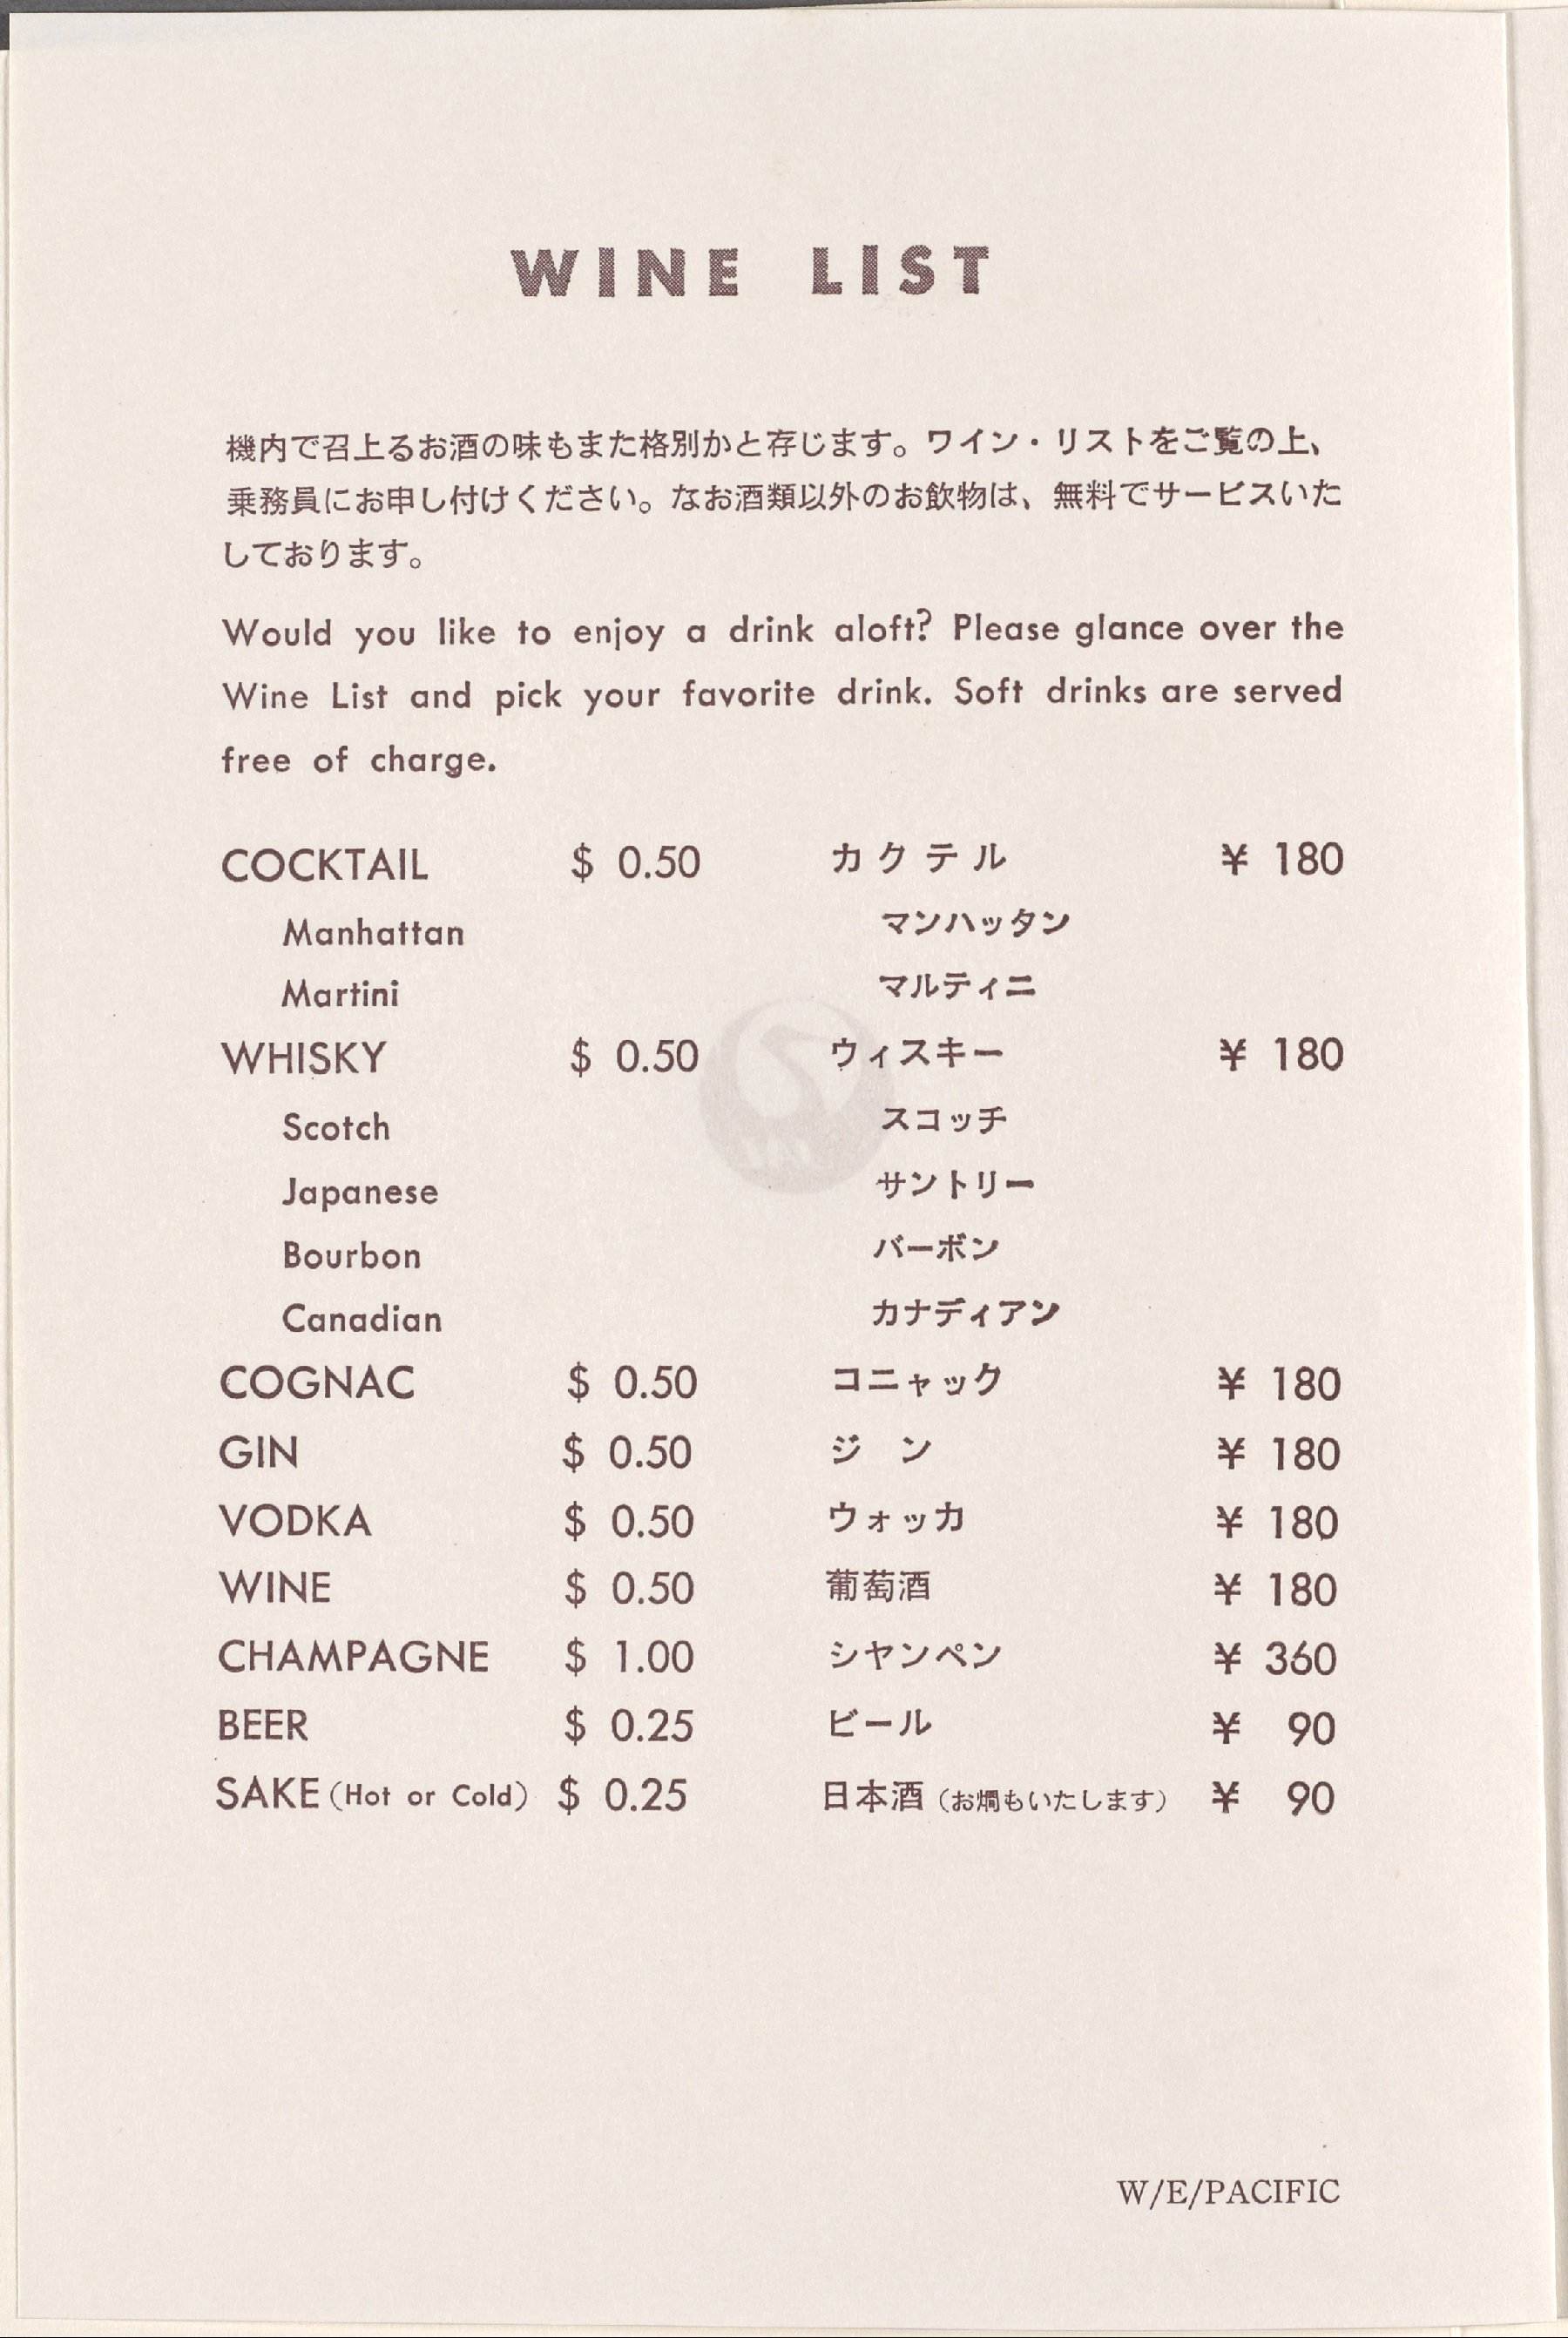 Japan Airlines 1970 wine list